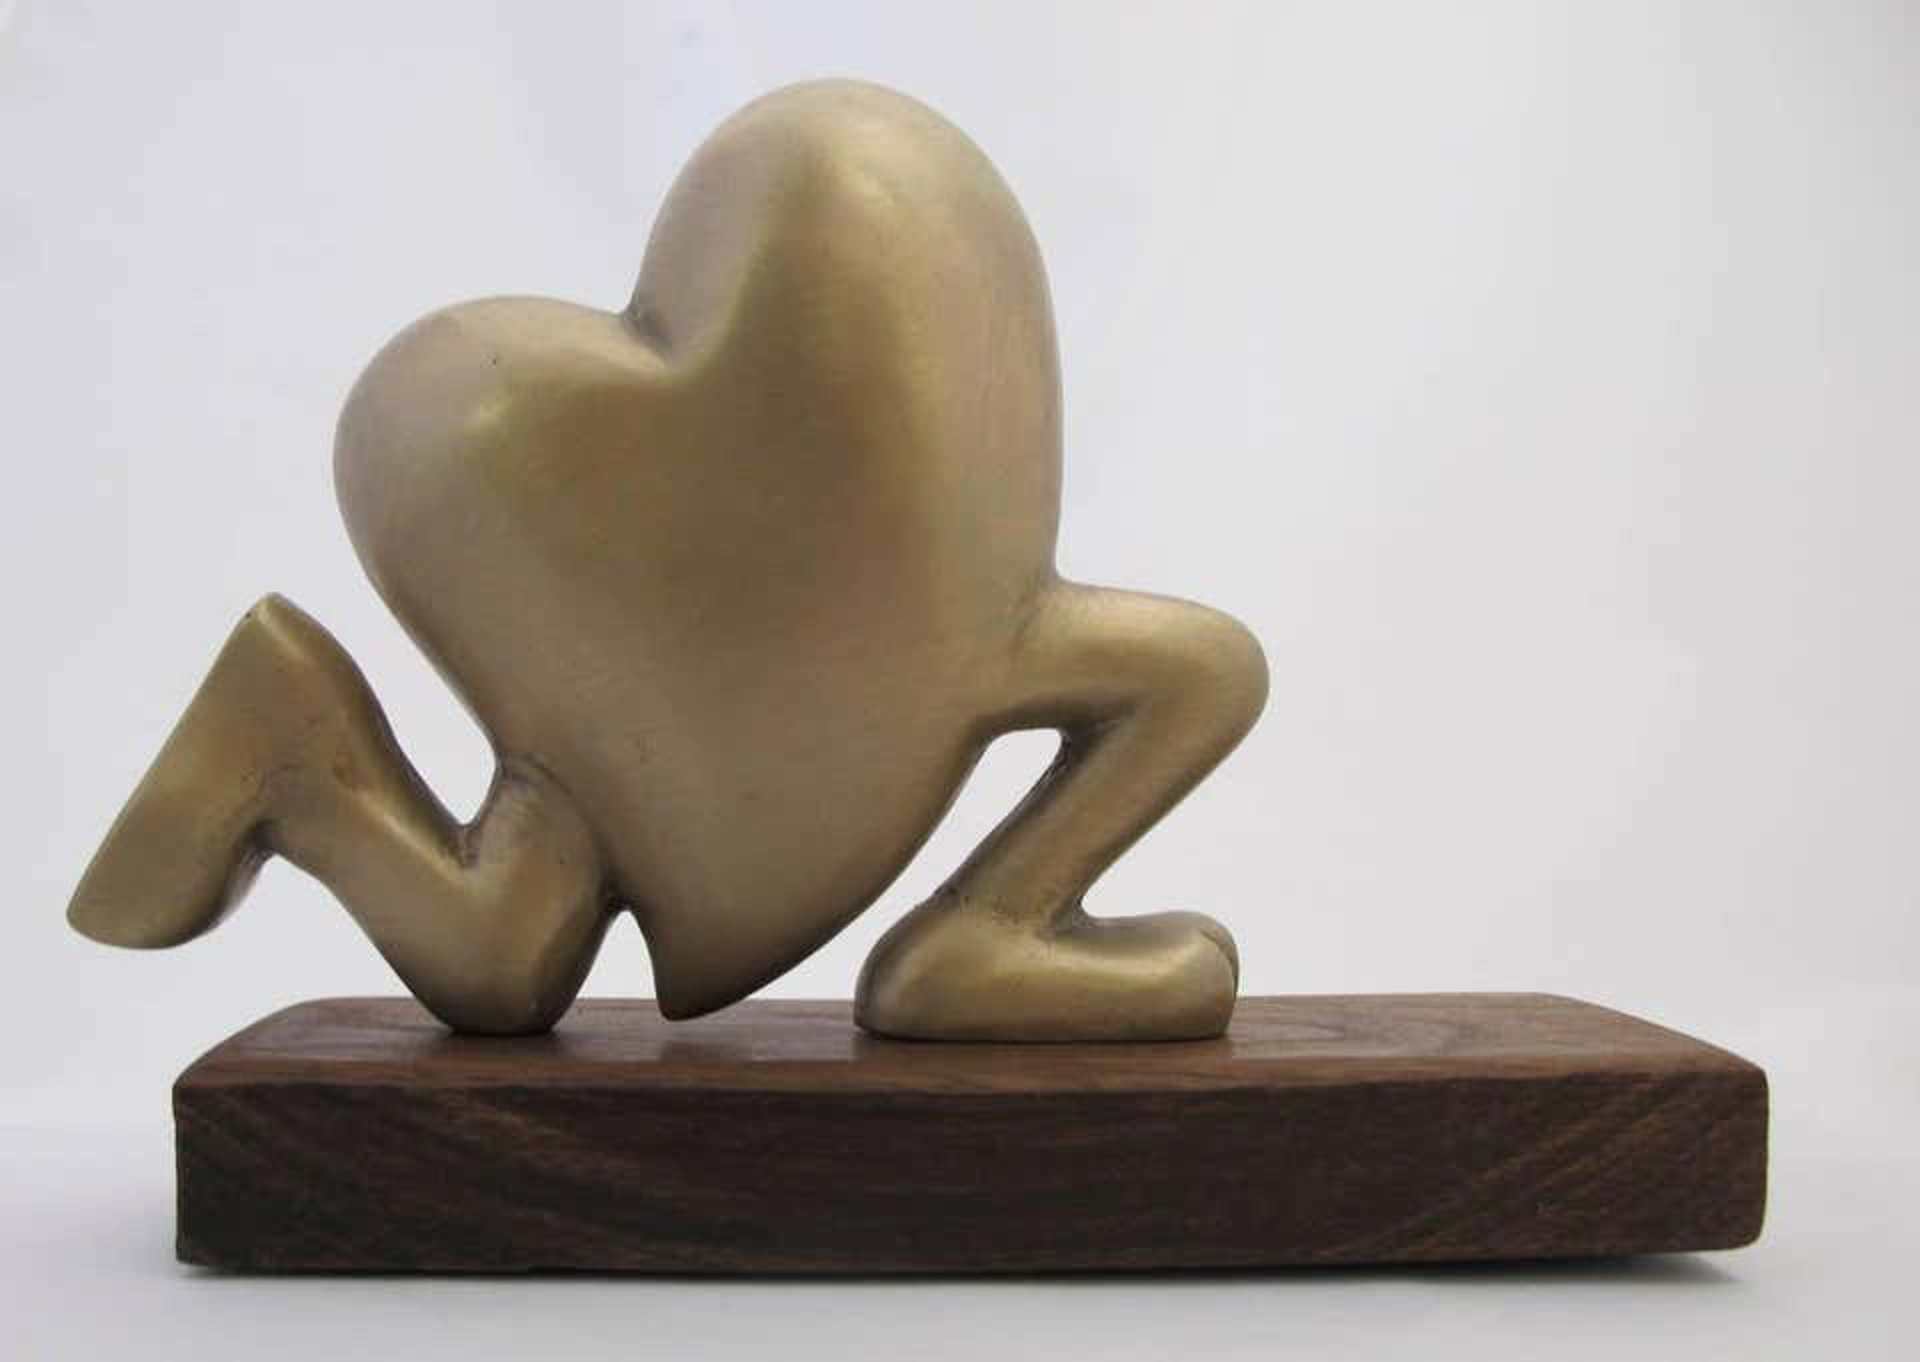 Running Heart small by Glenn Green Galleries